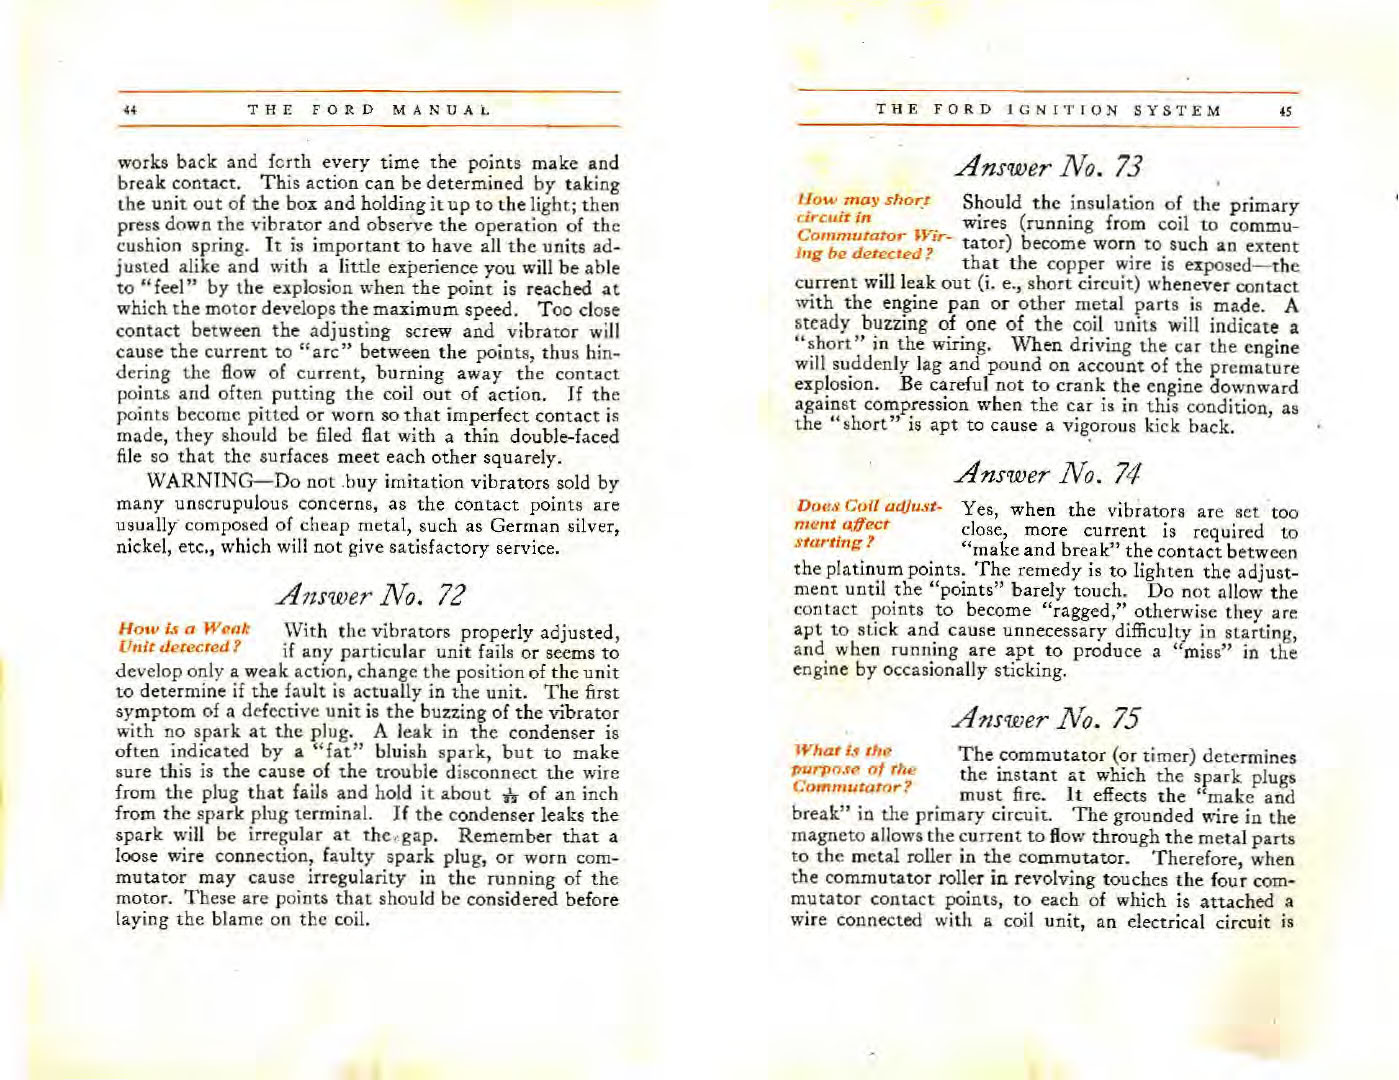 n_1915 Ford Owners Manual-44-45.jpg